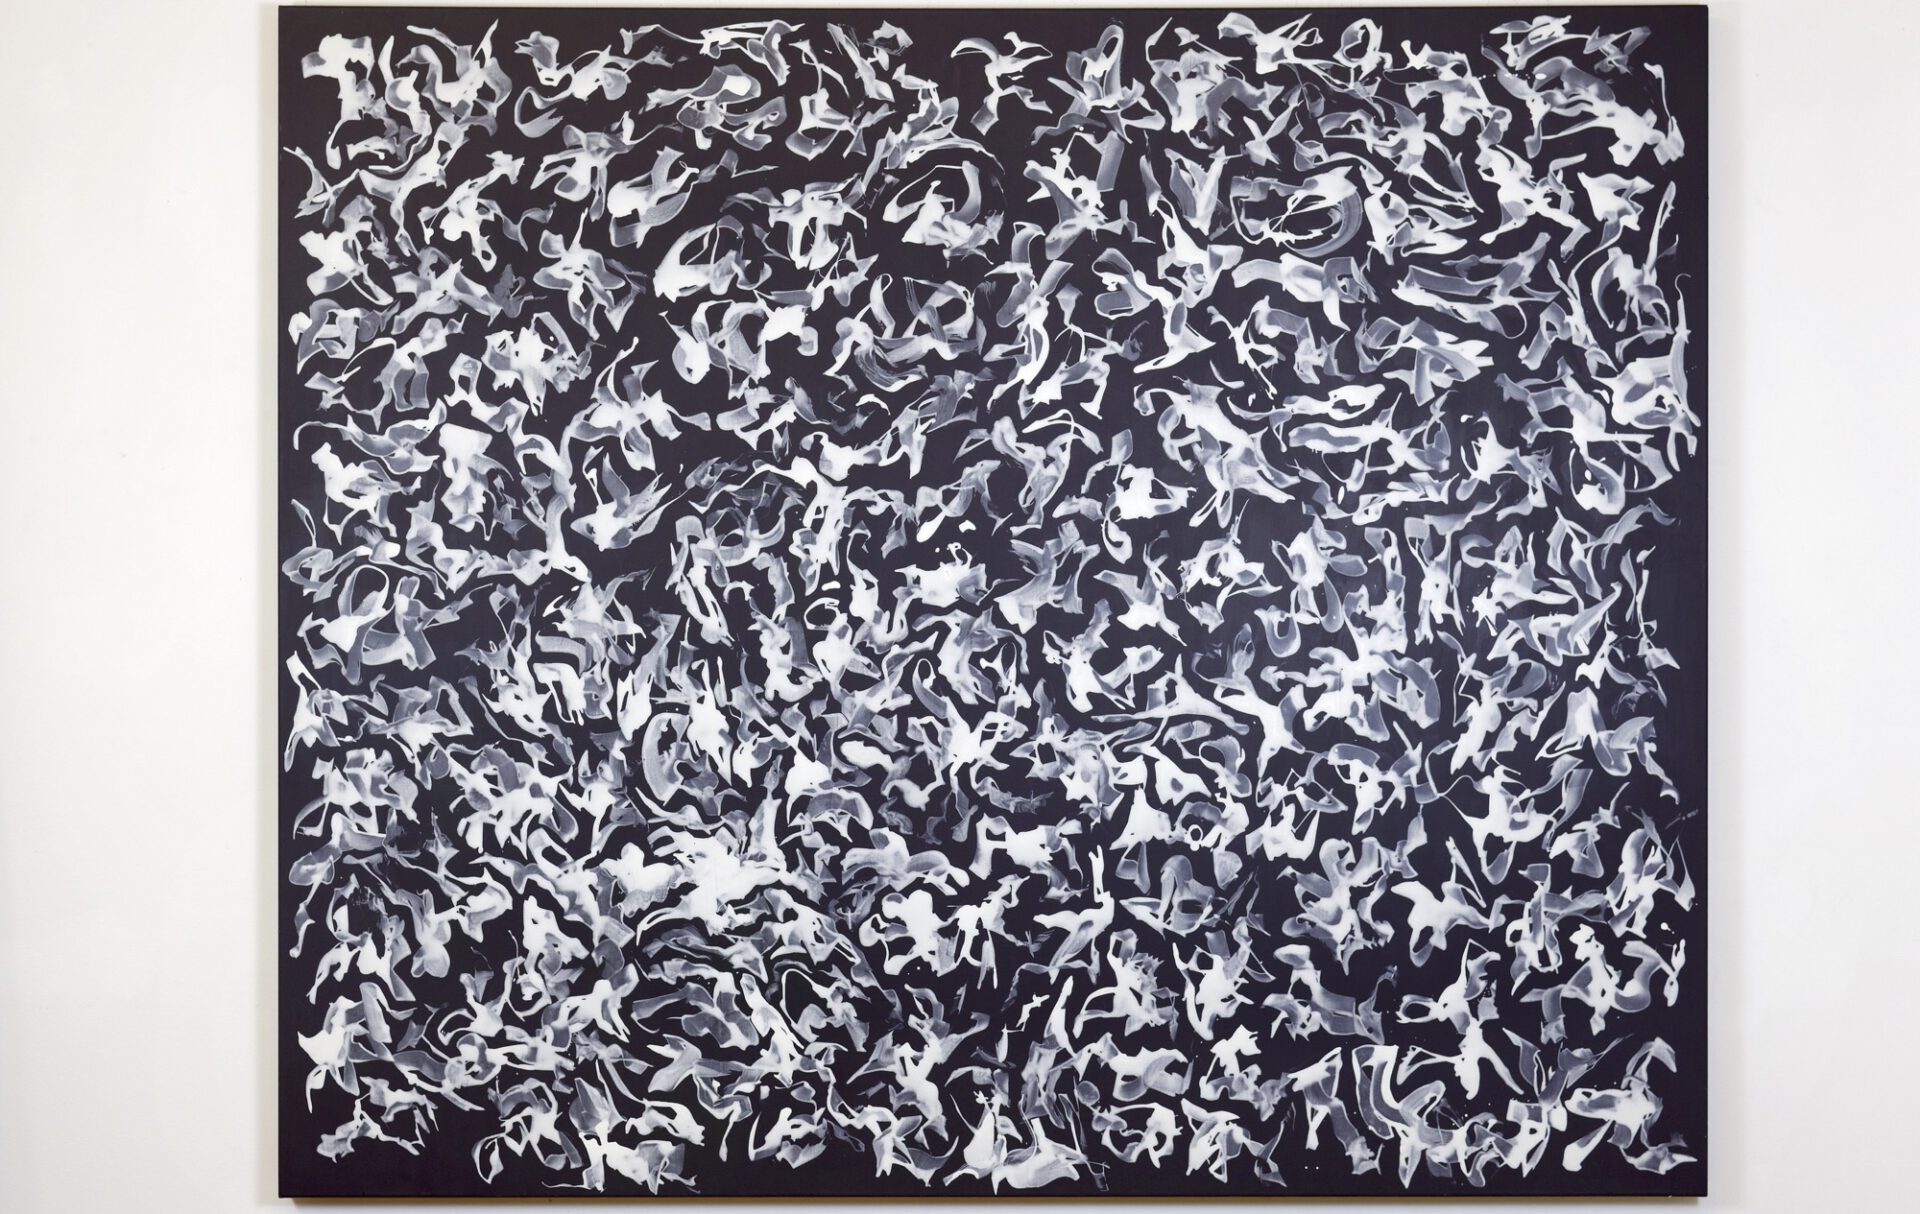 Work-No. 2089, acrylic on canvas, 150 x 180 cm, 2011